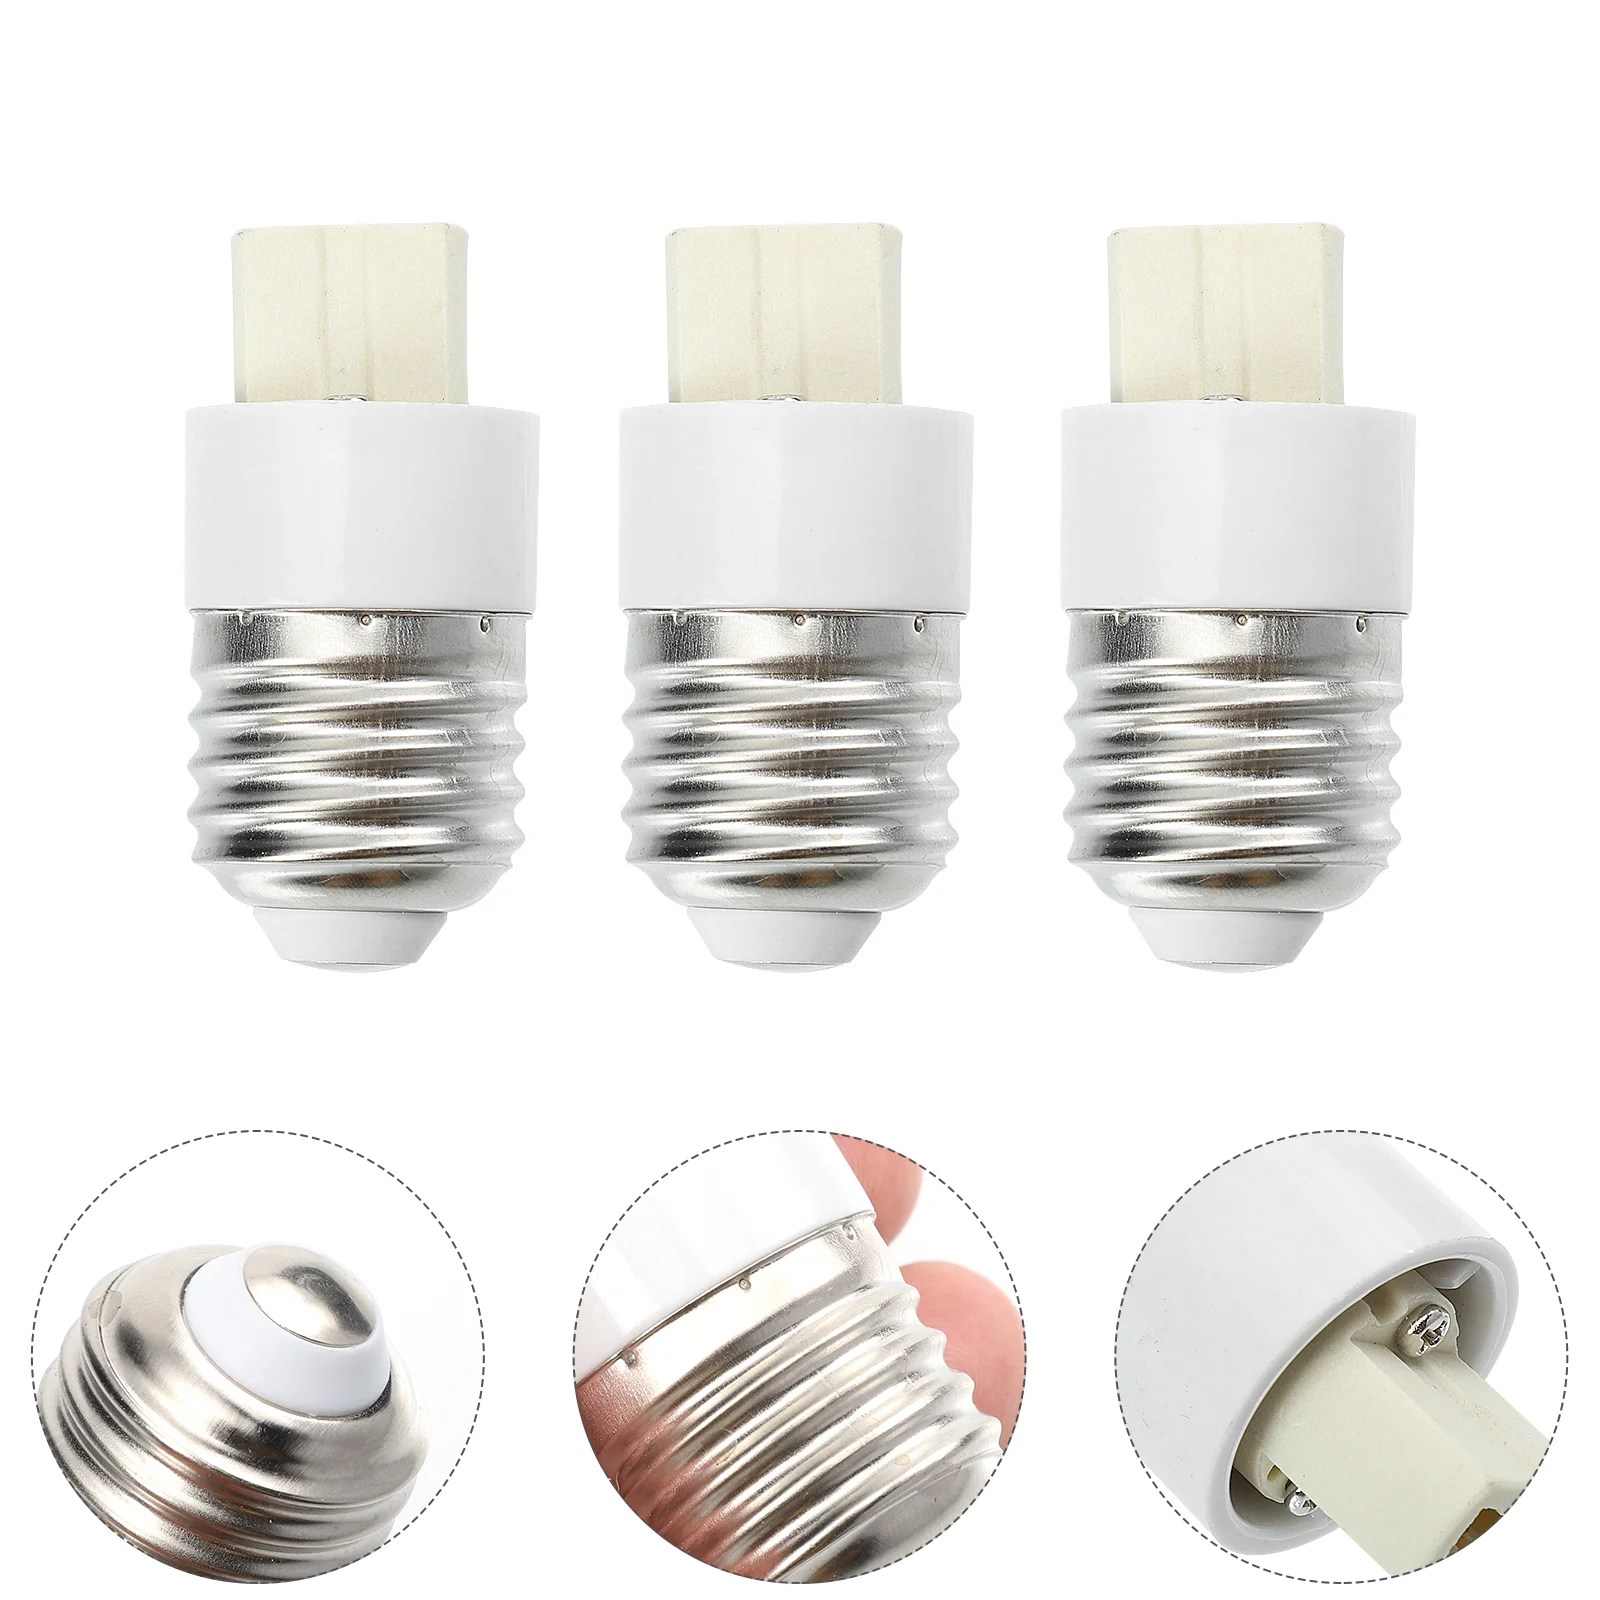 

Adapter Light Lamp Bulb Socket Converter Holder G9Base E27 Converters Adapters Lights Plug Splitter Mogul Outlet Candelabra Led